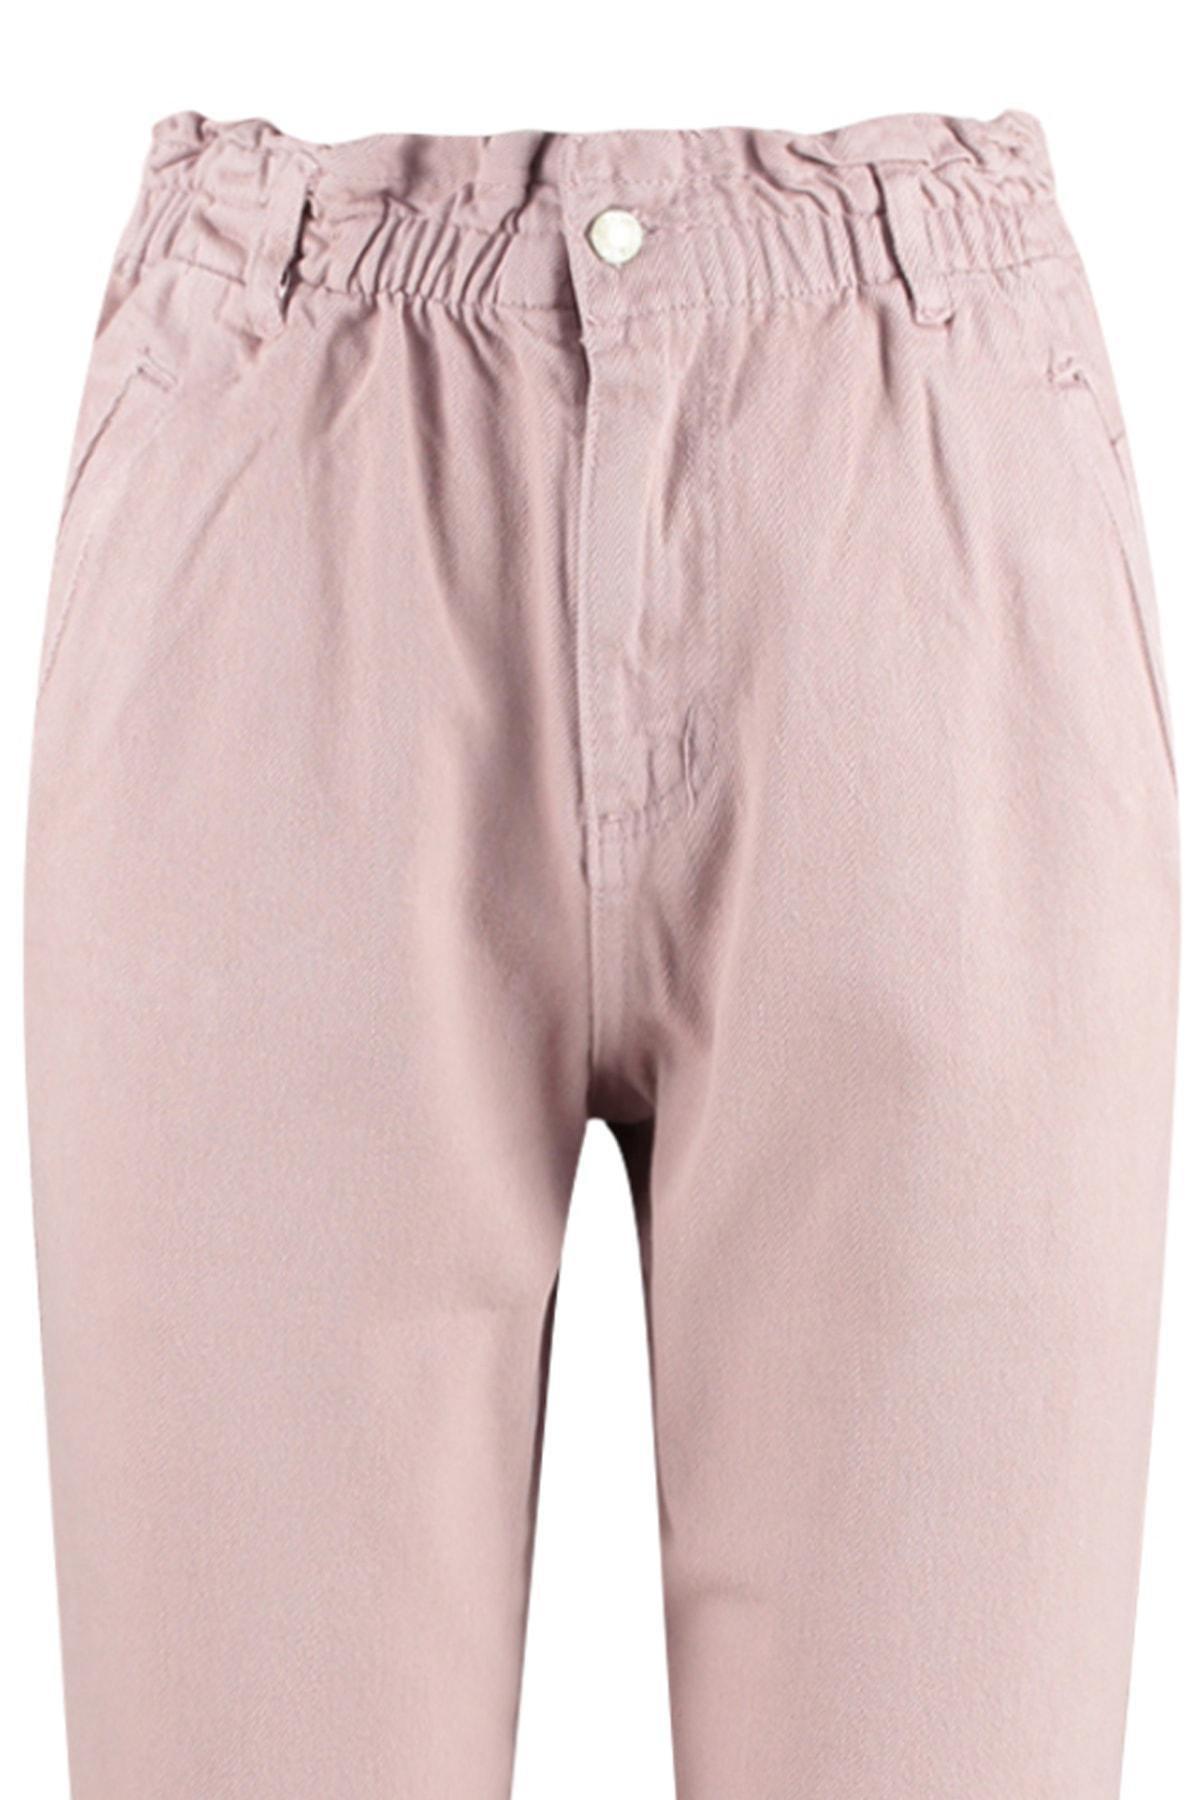 Trendyol - Pink Denim Straight Jeans